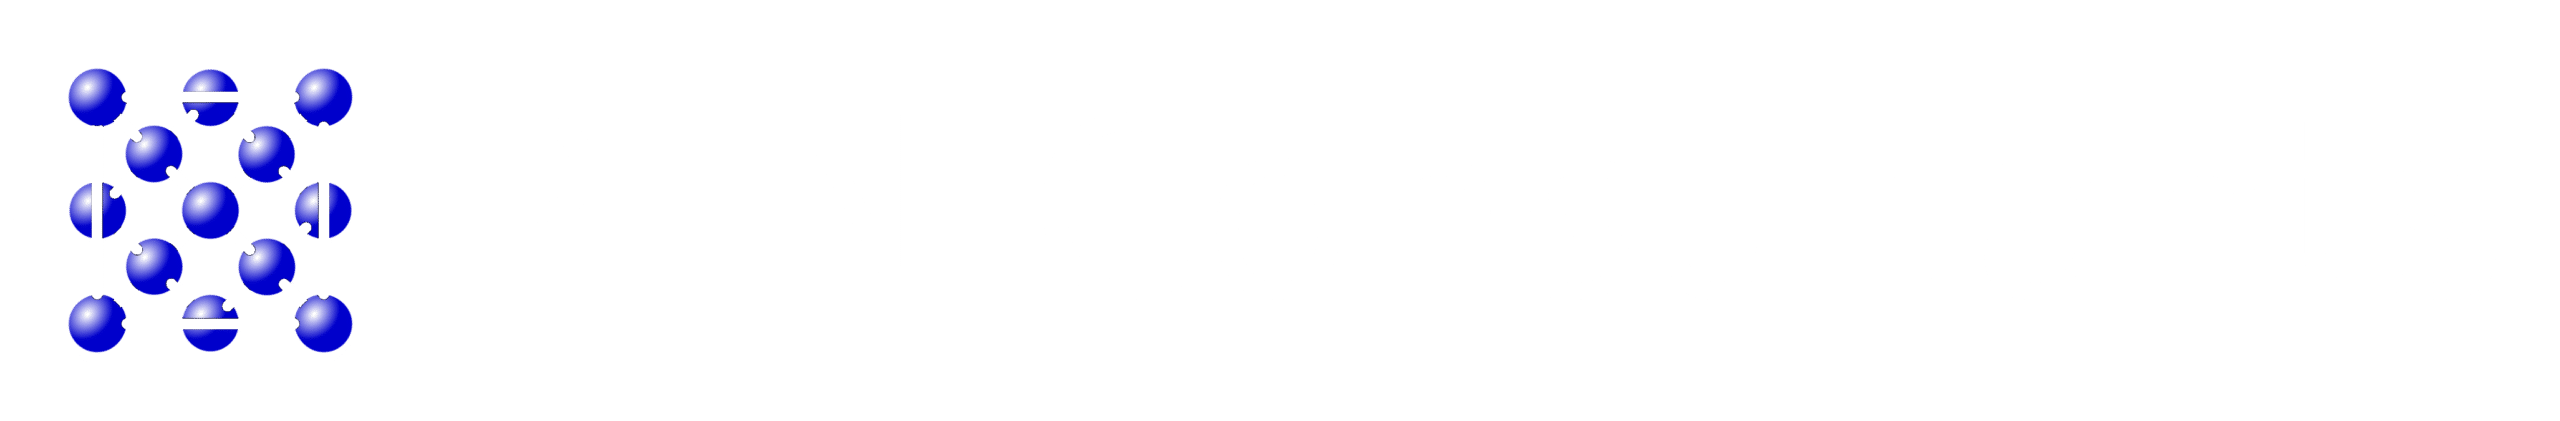 PEN Consultants Logo